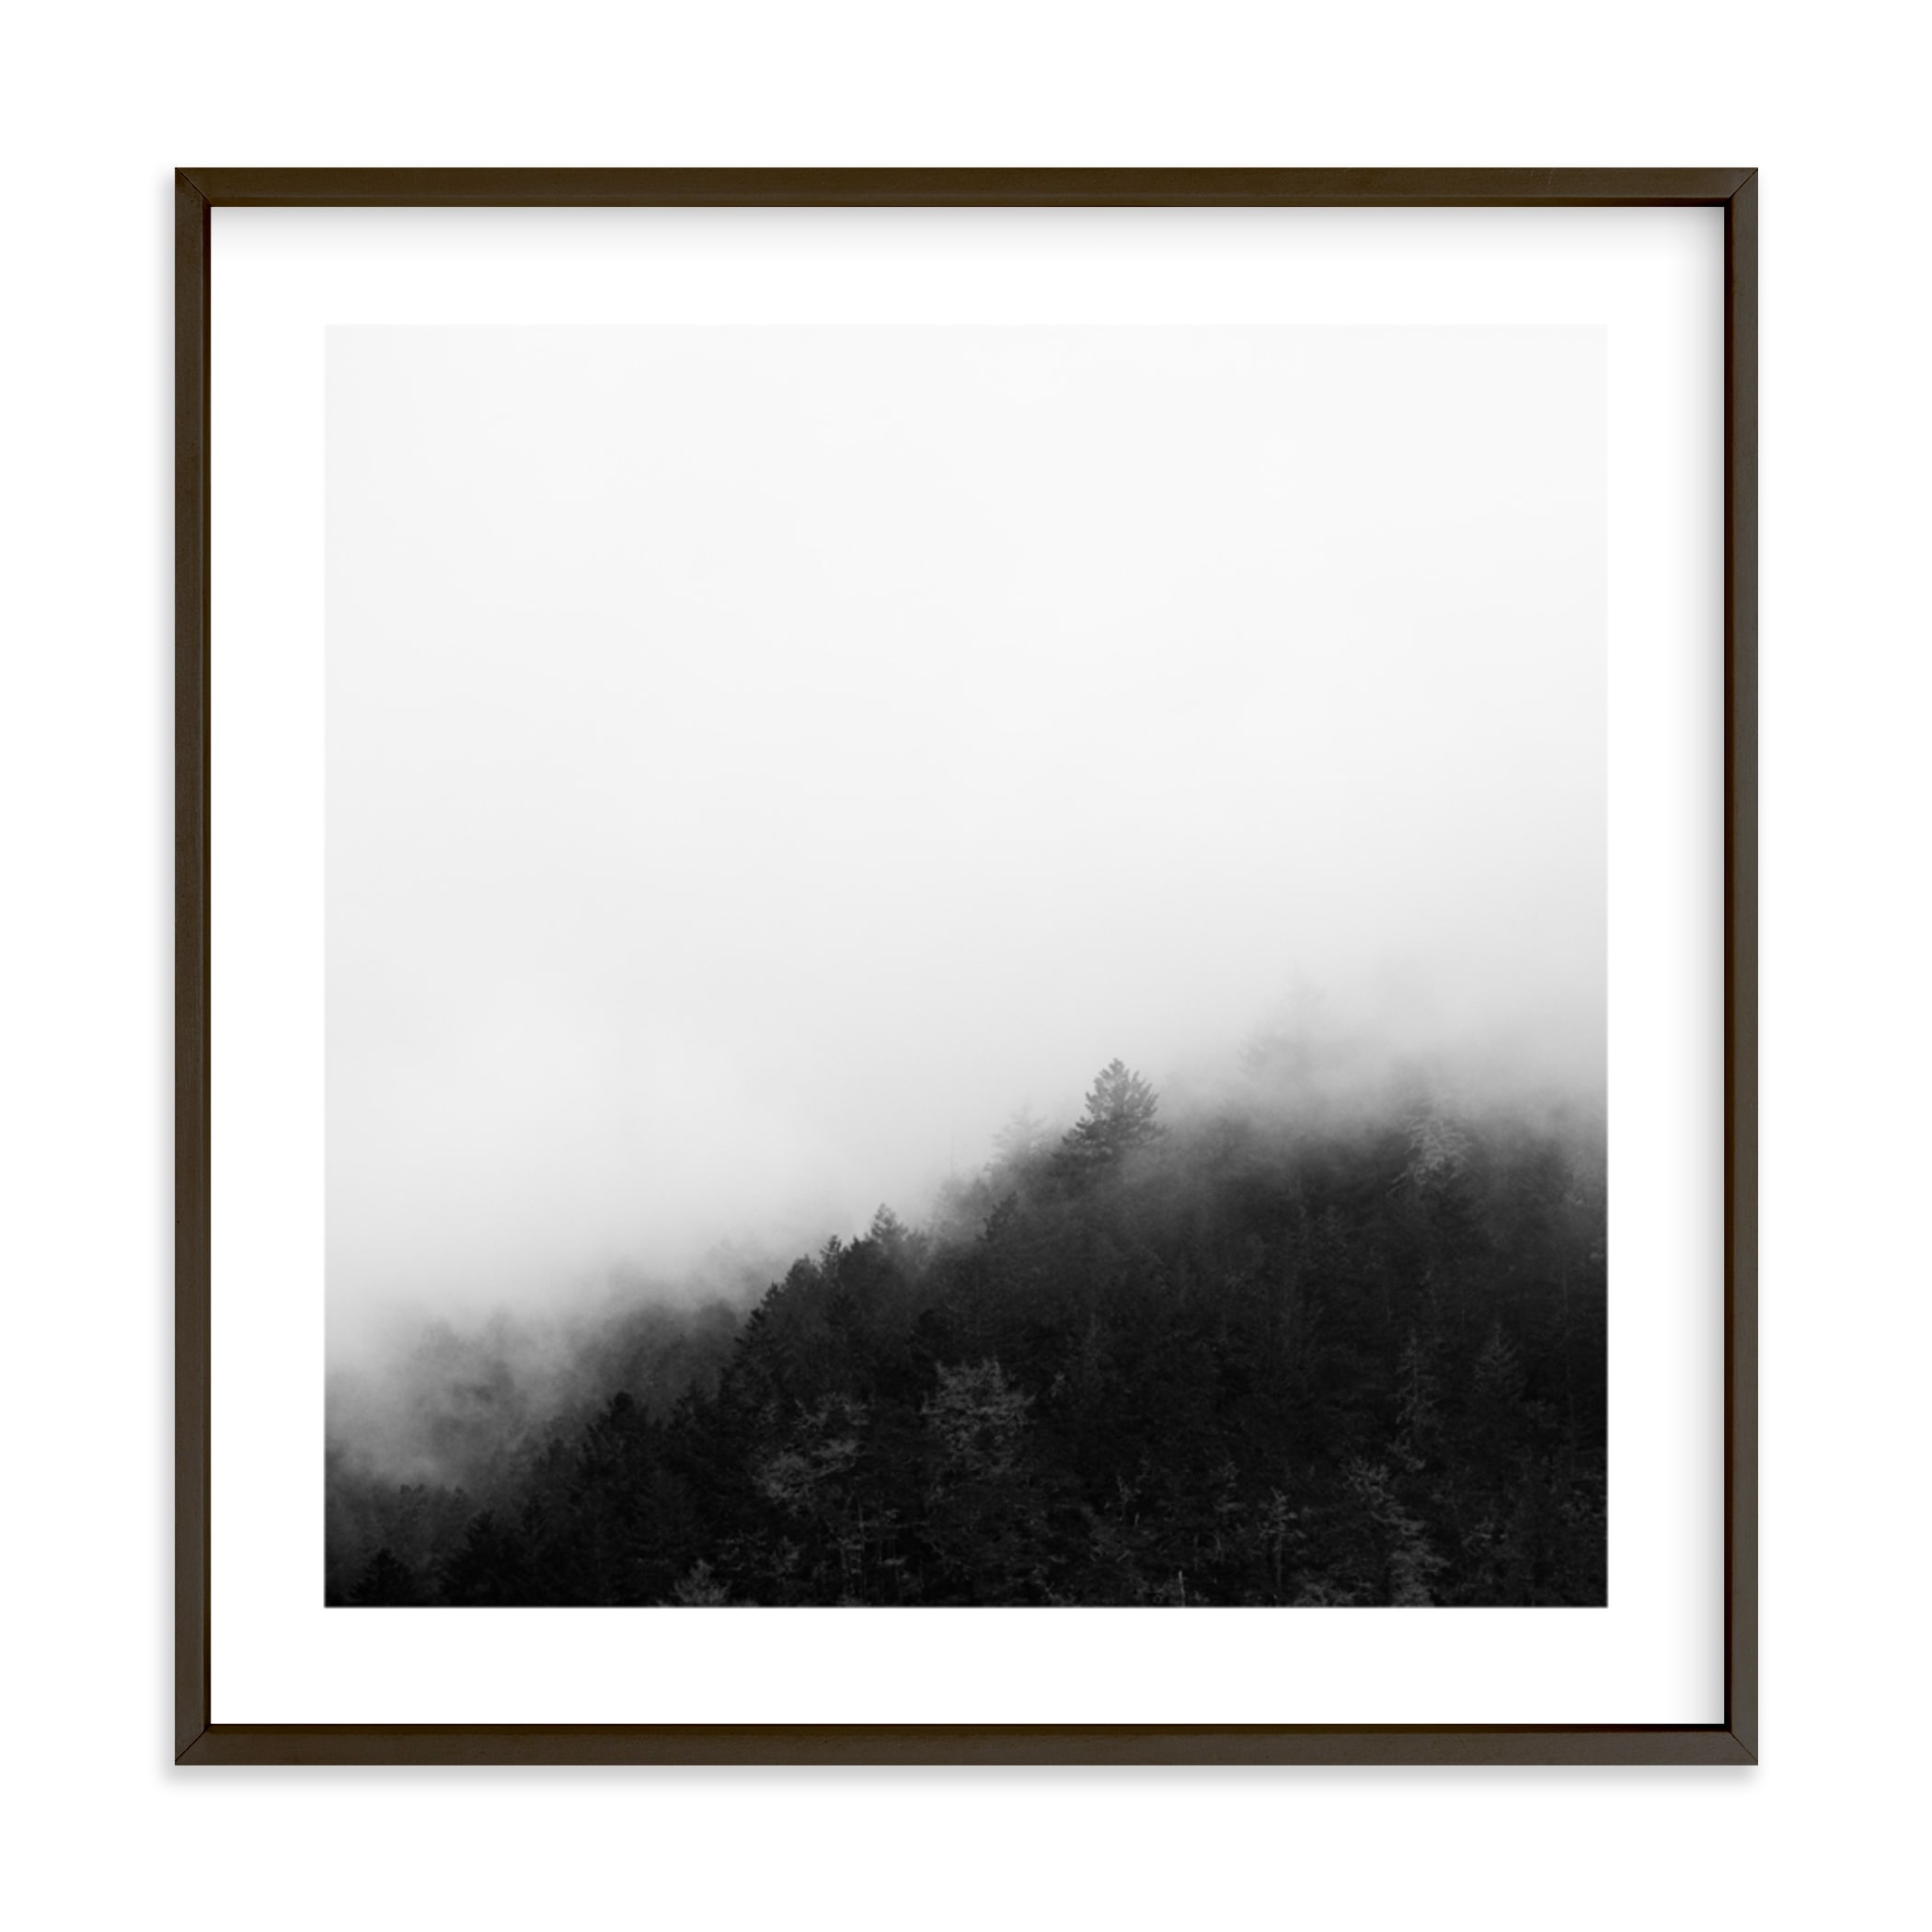 Mystify Art Print (24x24. black frame, white border) - Image 0